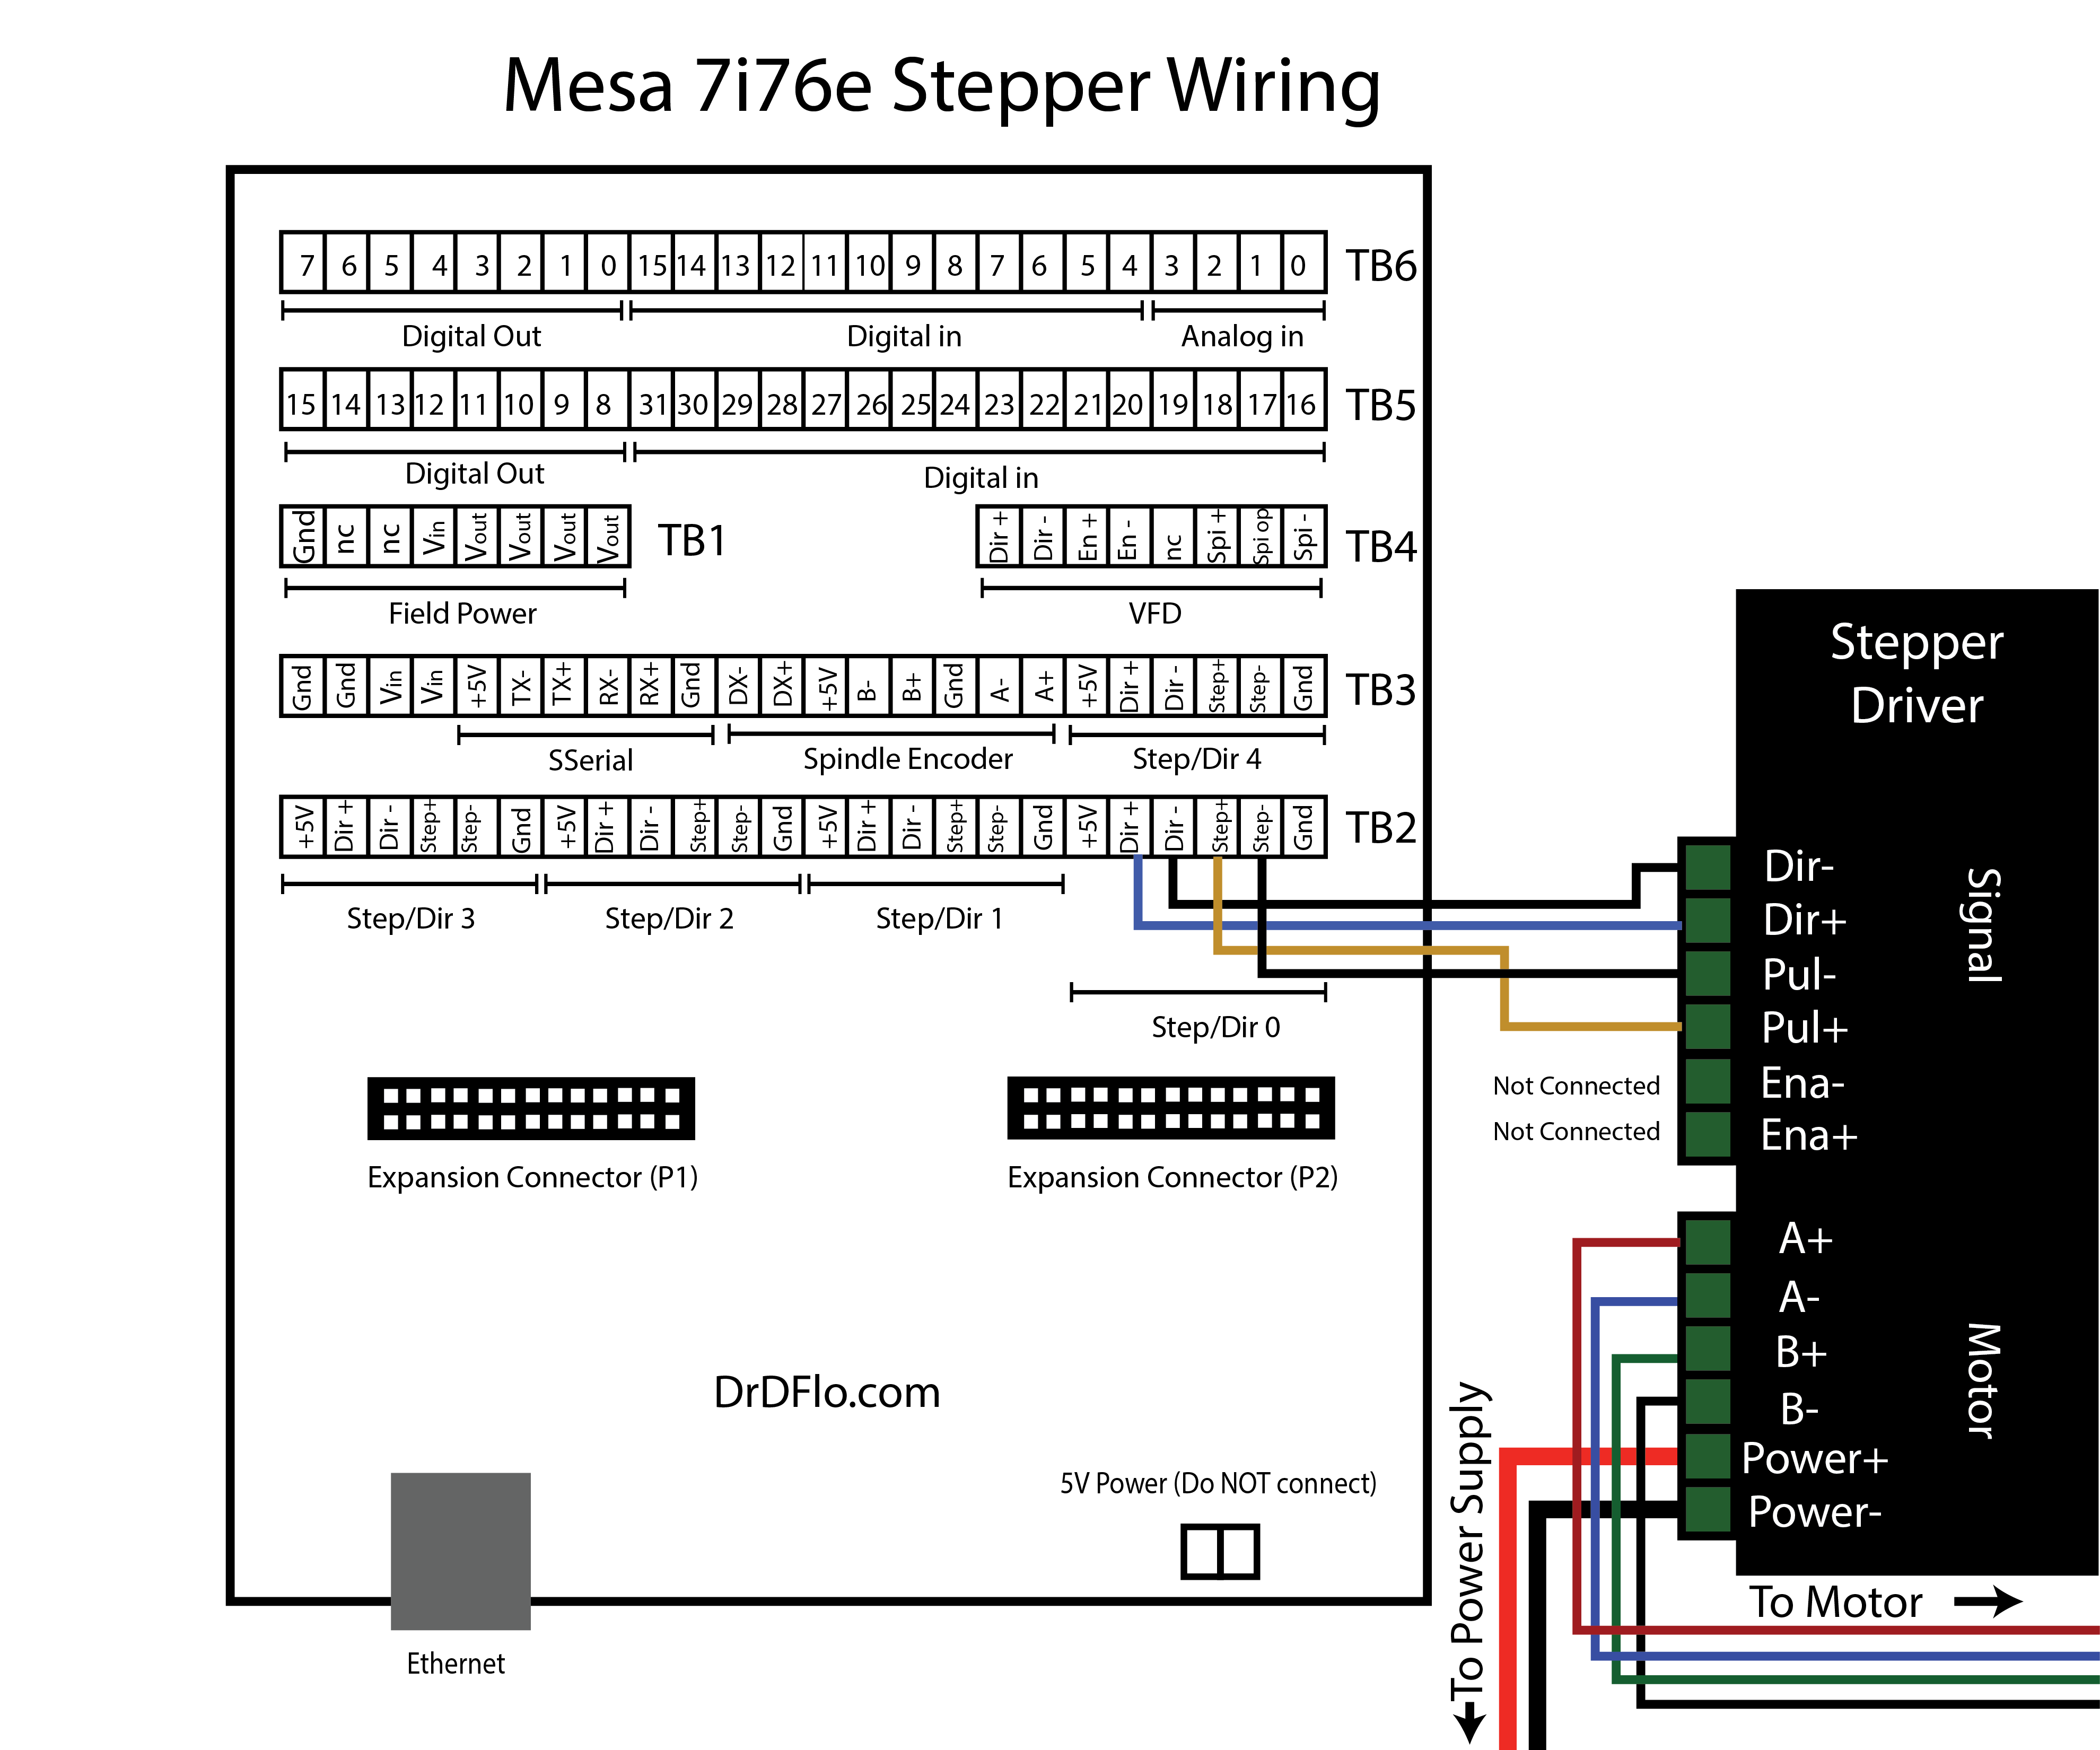 Wiring stepper drivers to the Mesa 7i76e